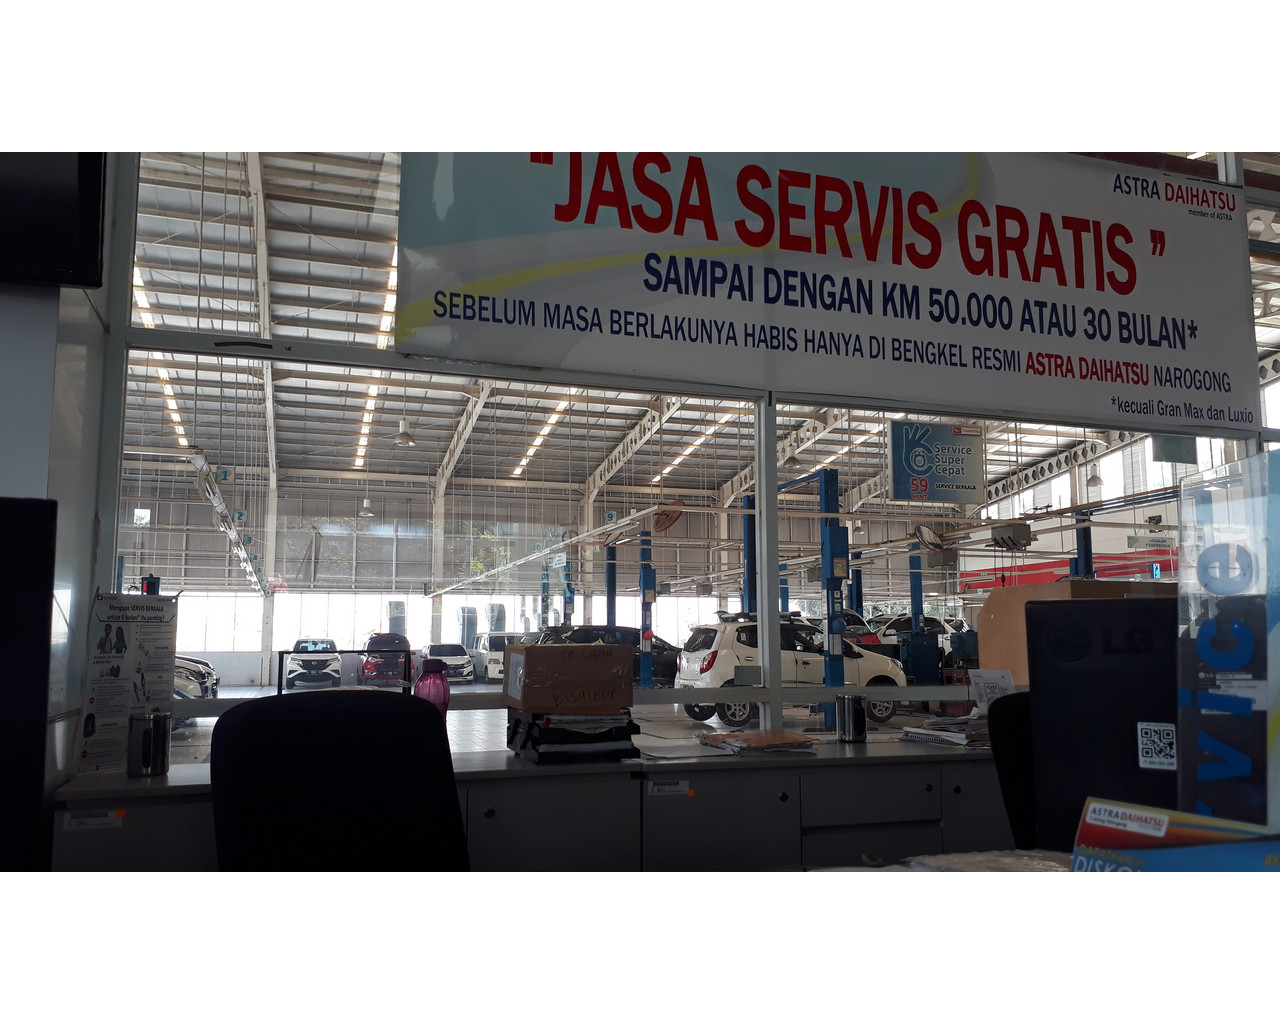 Jasa service Gratis